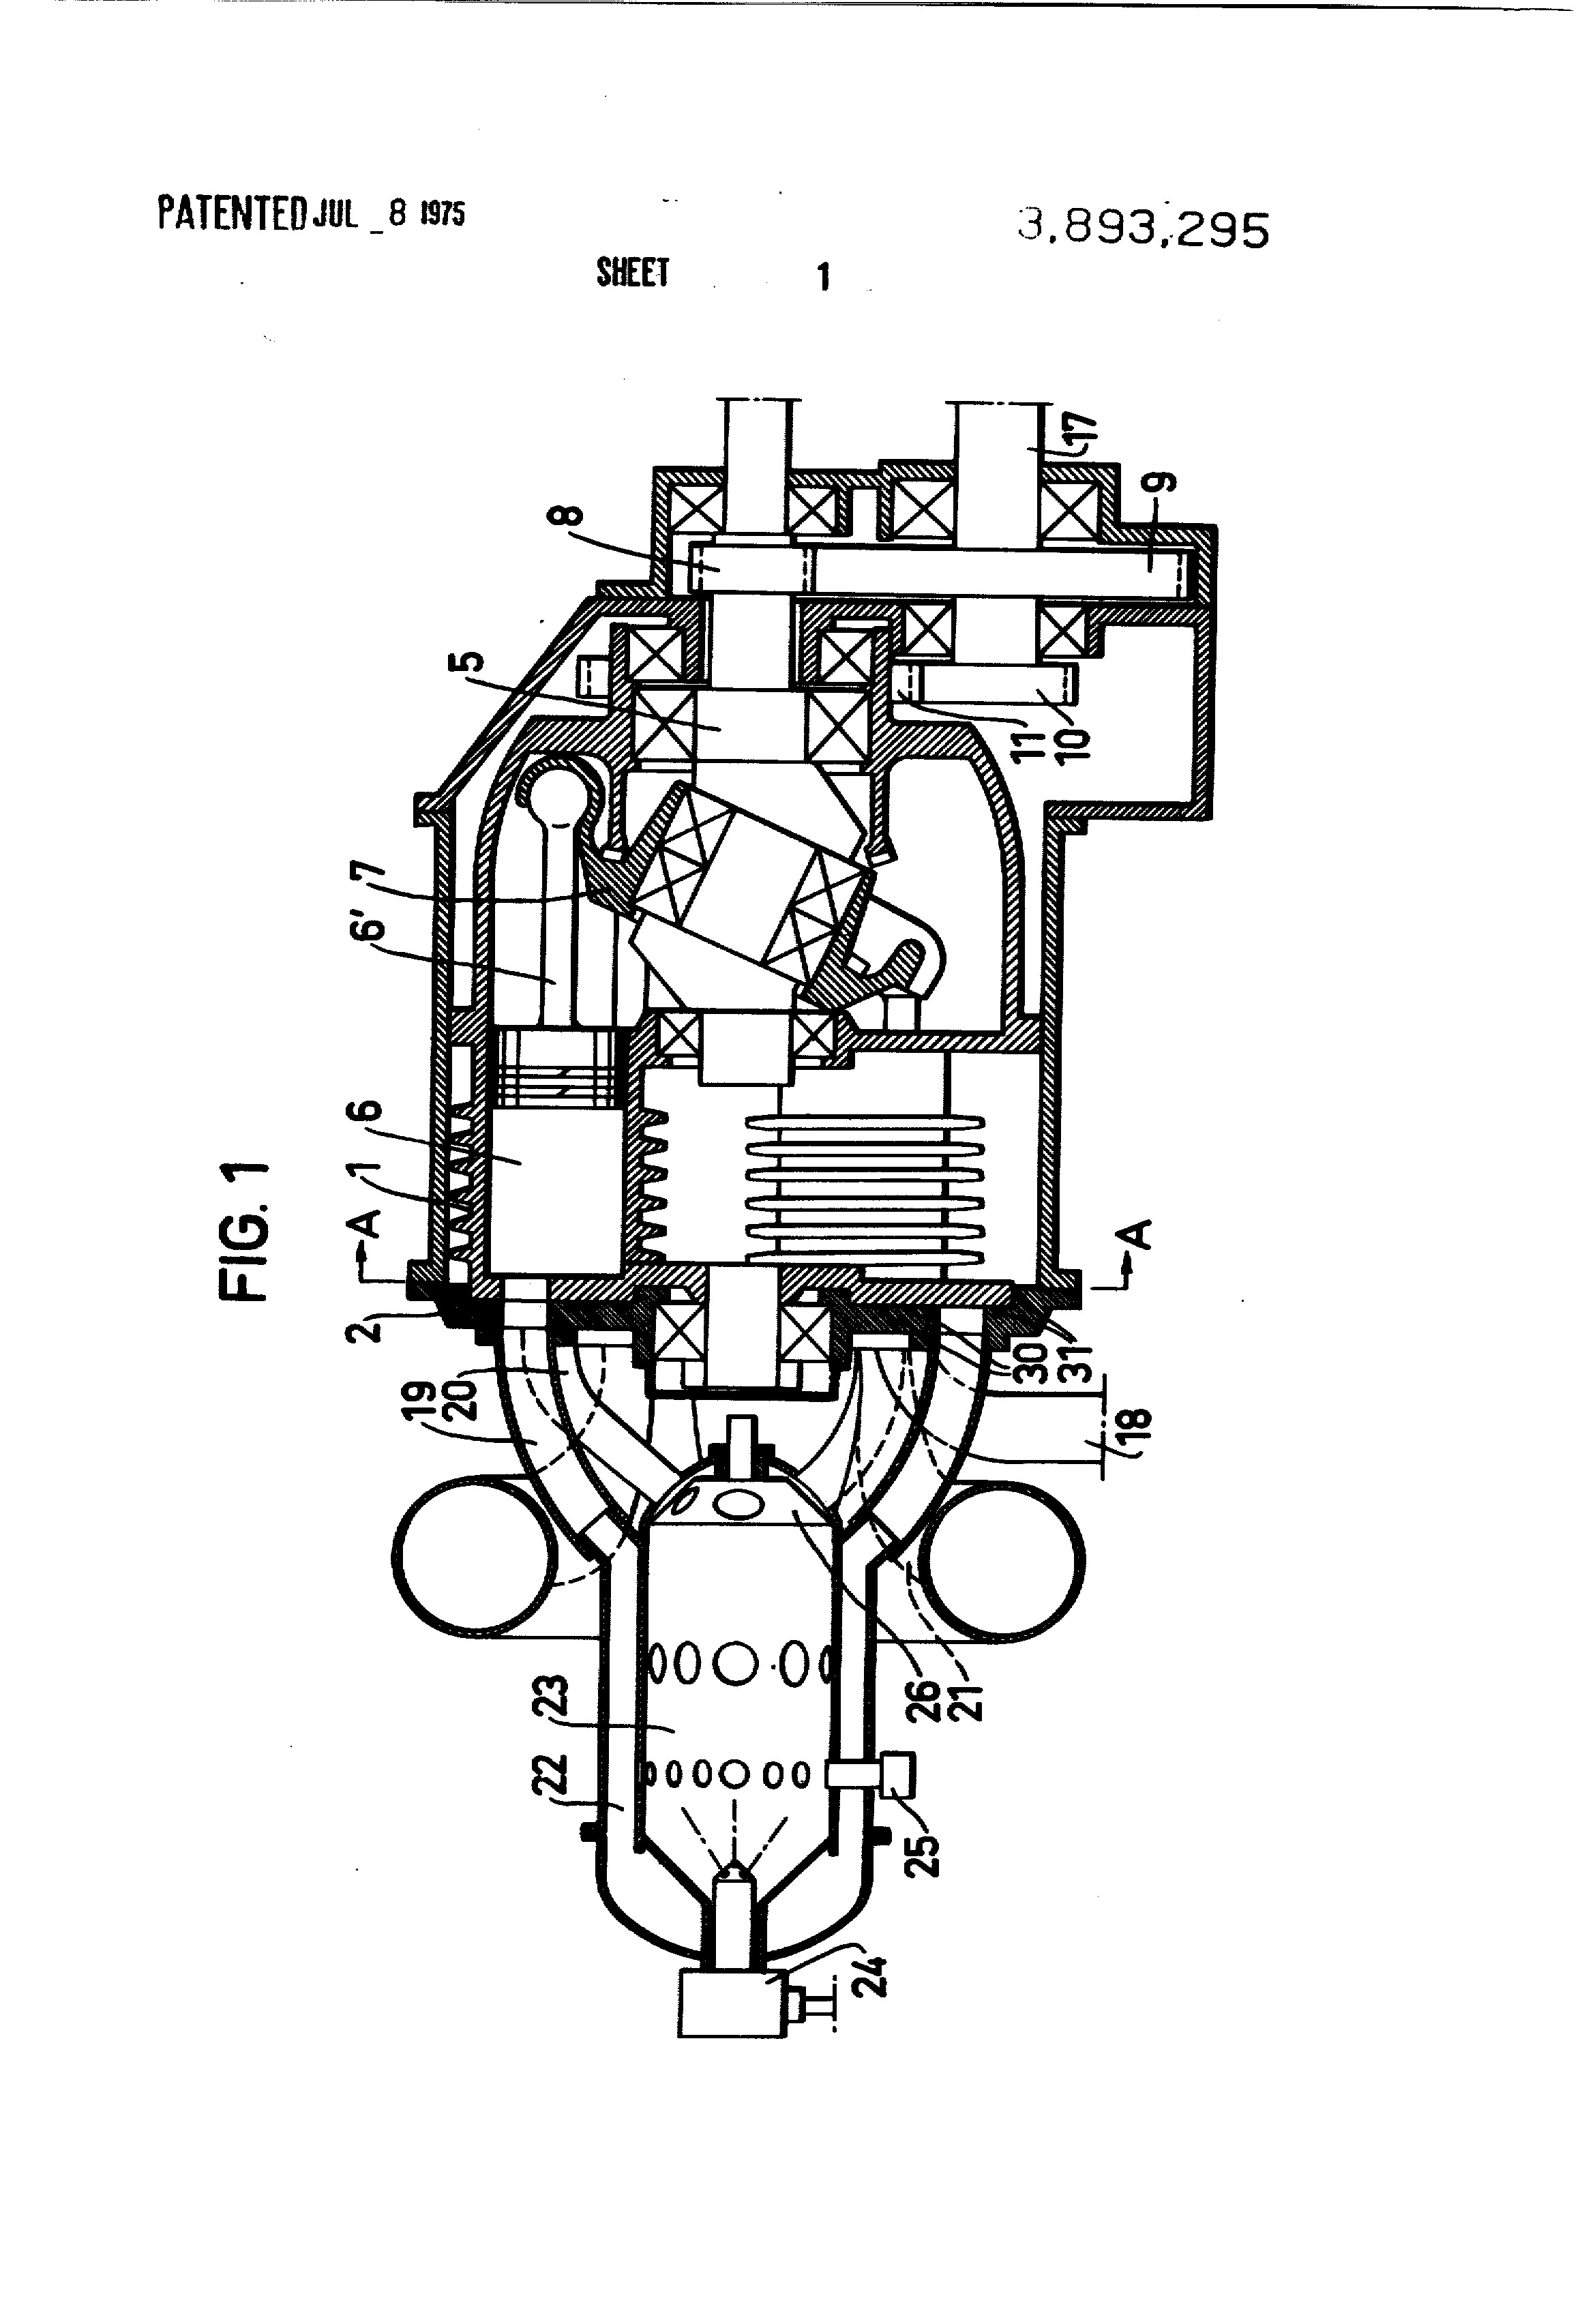 Engine Valve Train Diagram Patent Us External Bustion Swash Plate Engine Employing Of Engine Valve Train Diagram